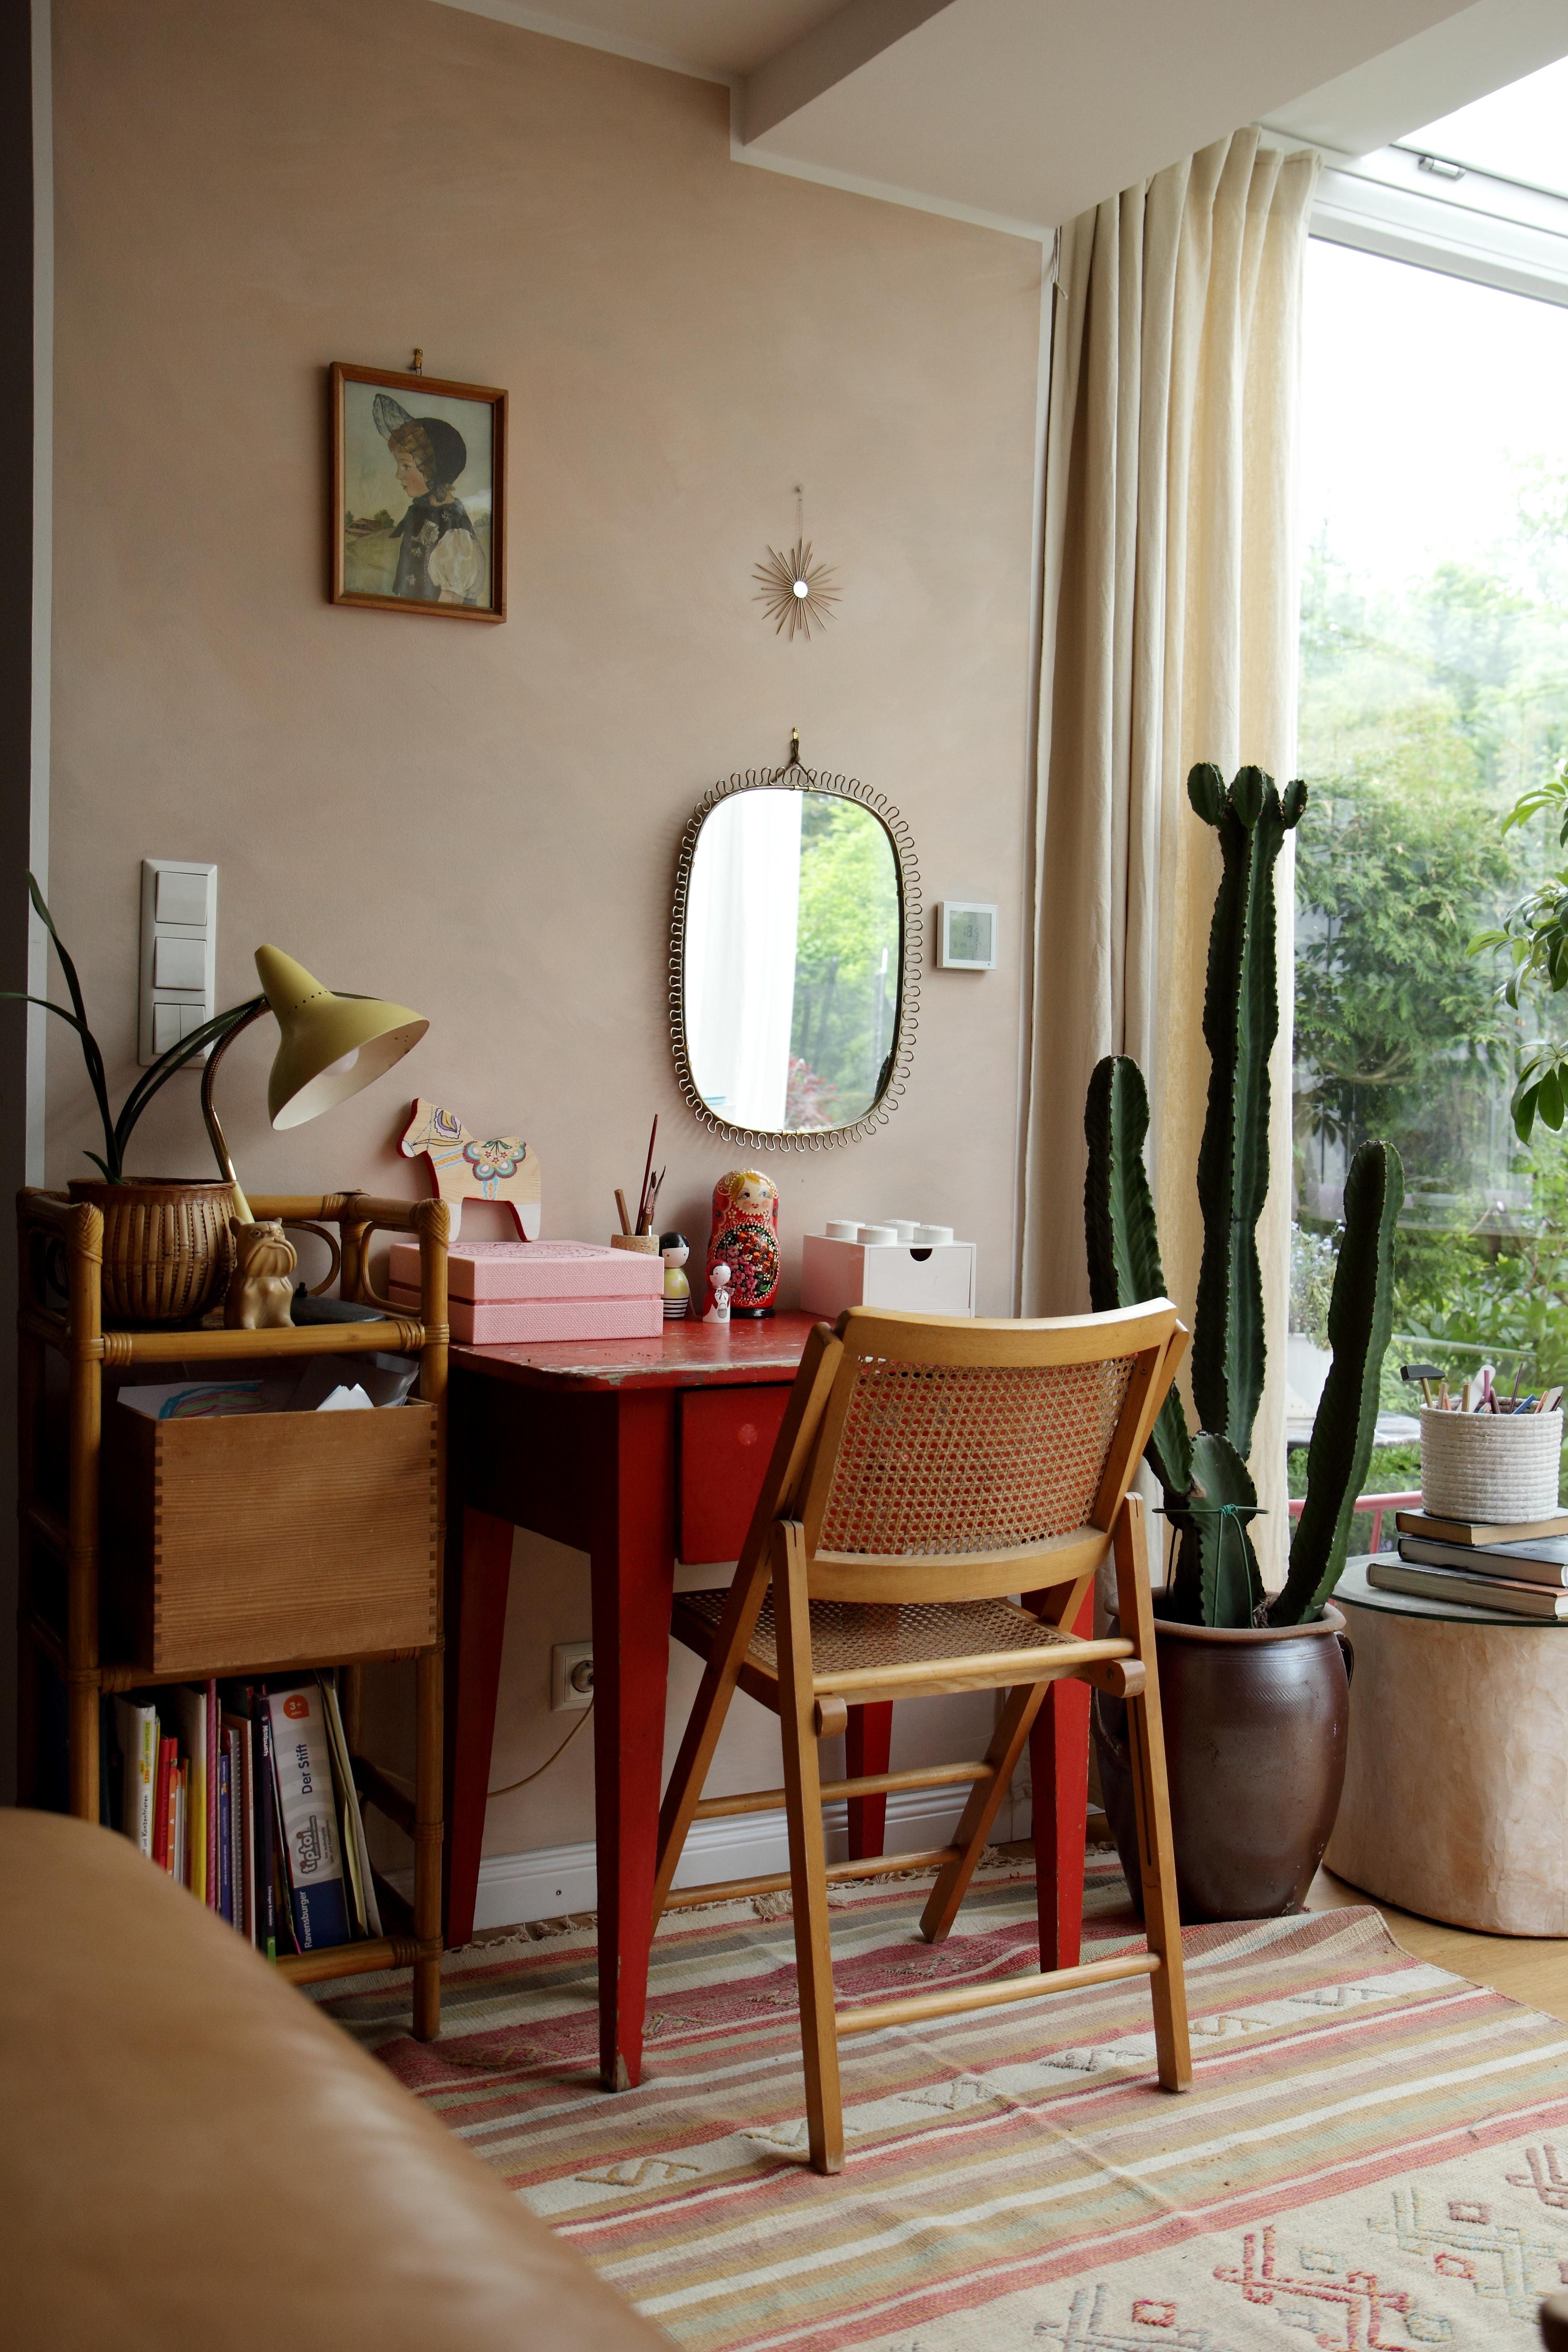 #livingroom #wohnzimmer #kreaitivecke #colourful #vintage